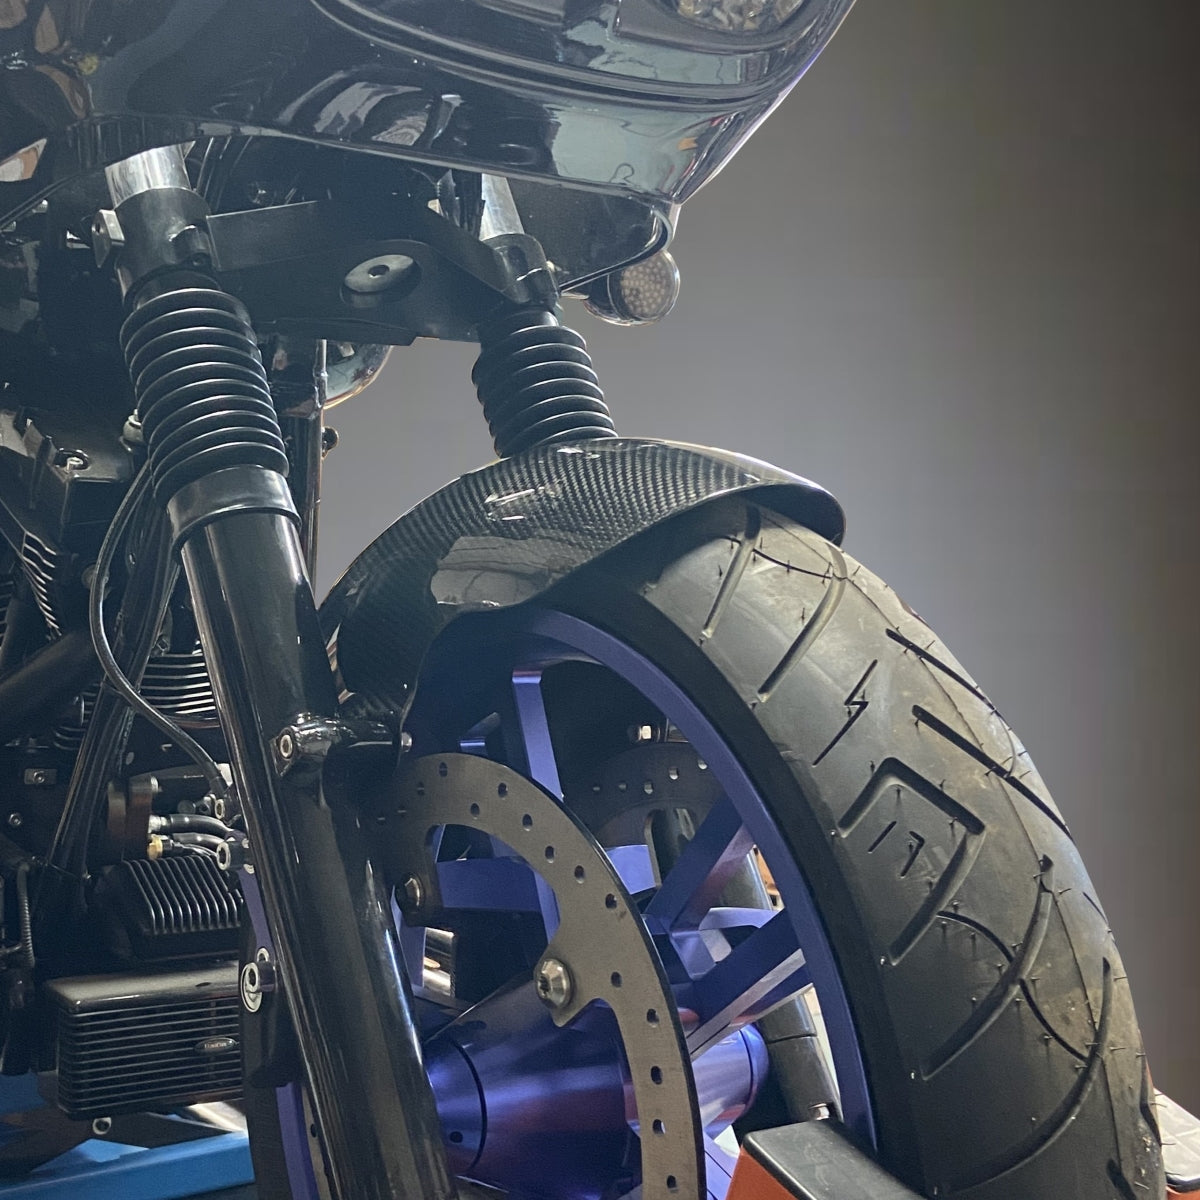 NEW!!! Carbon Fiber front fenders for Harley touring models!